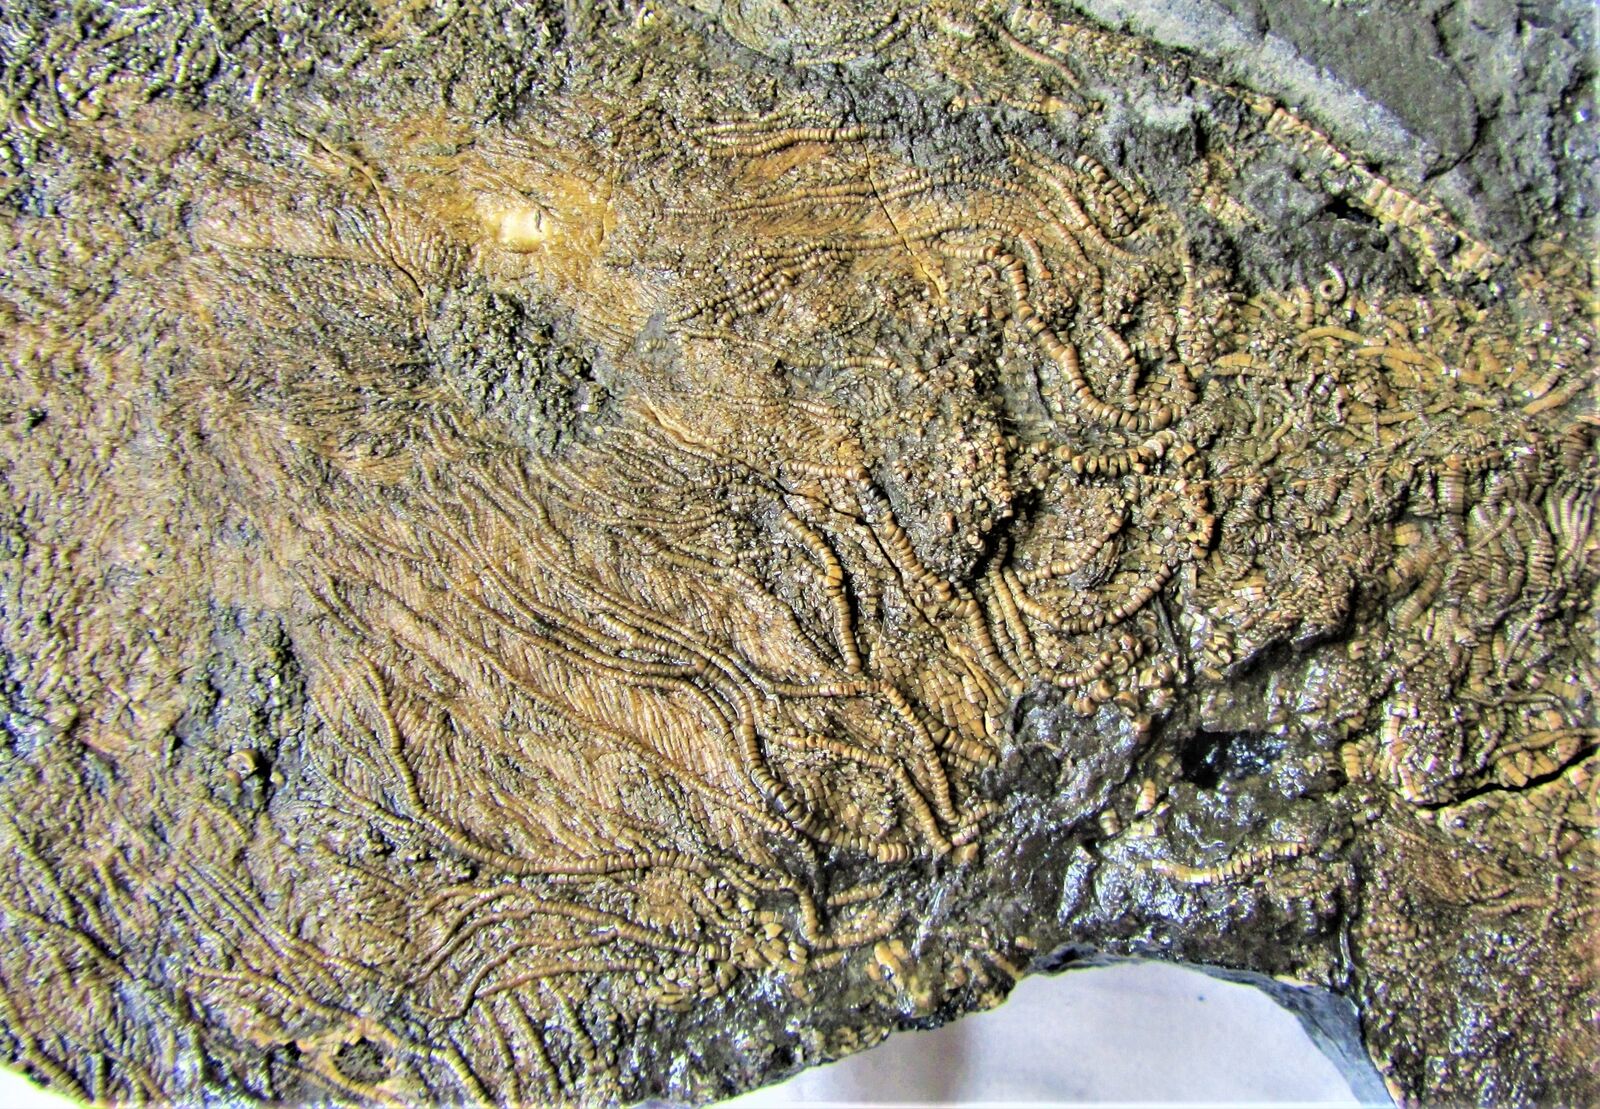 Huge 265mm uncommon crinoid colony Pentacrinites Charmouth Jurassic Coast UK